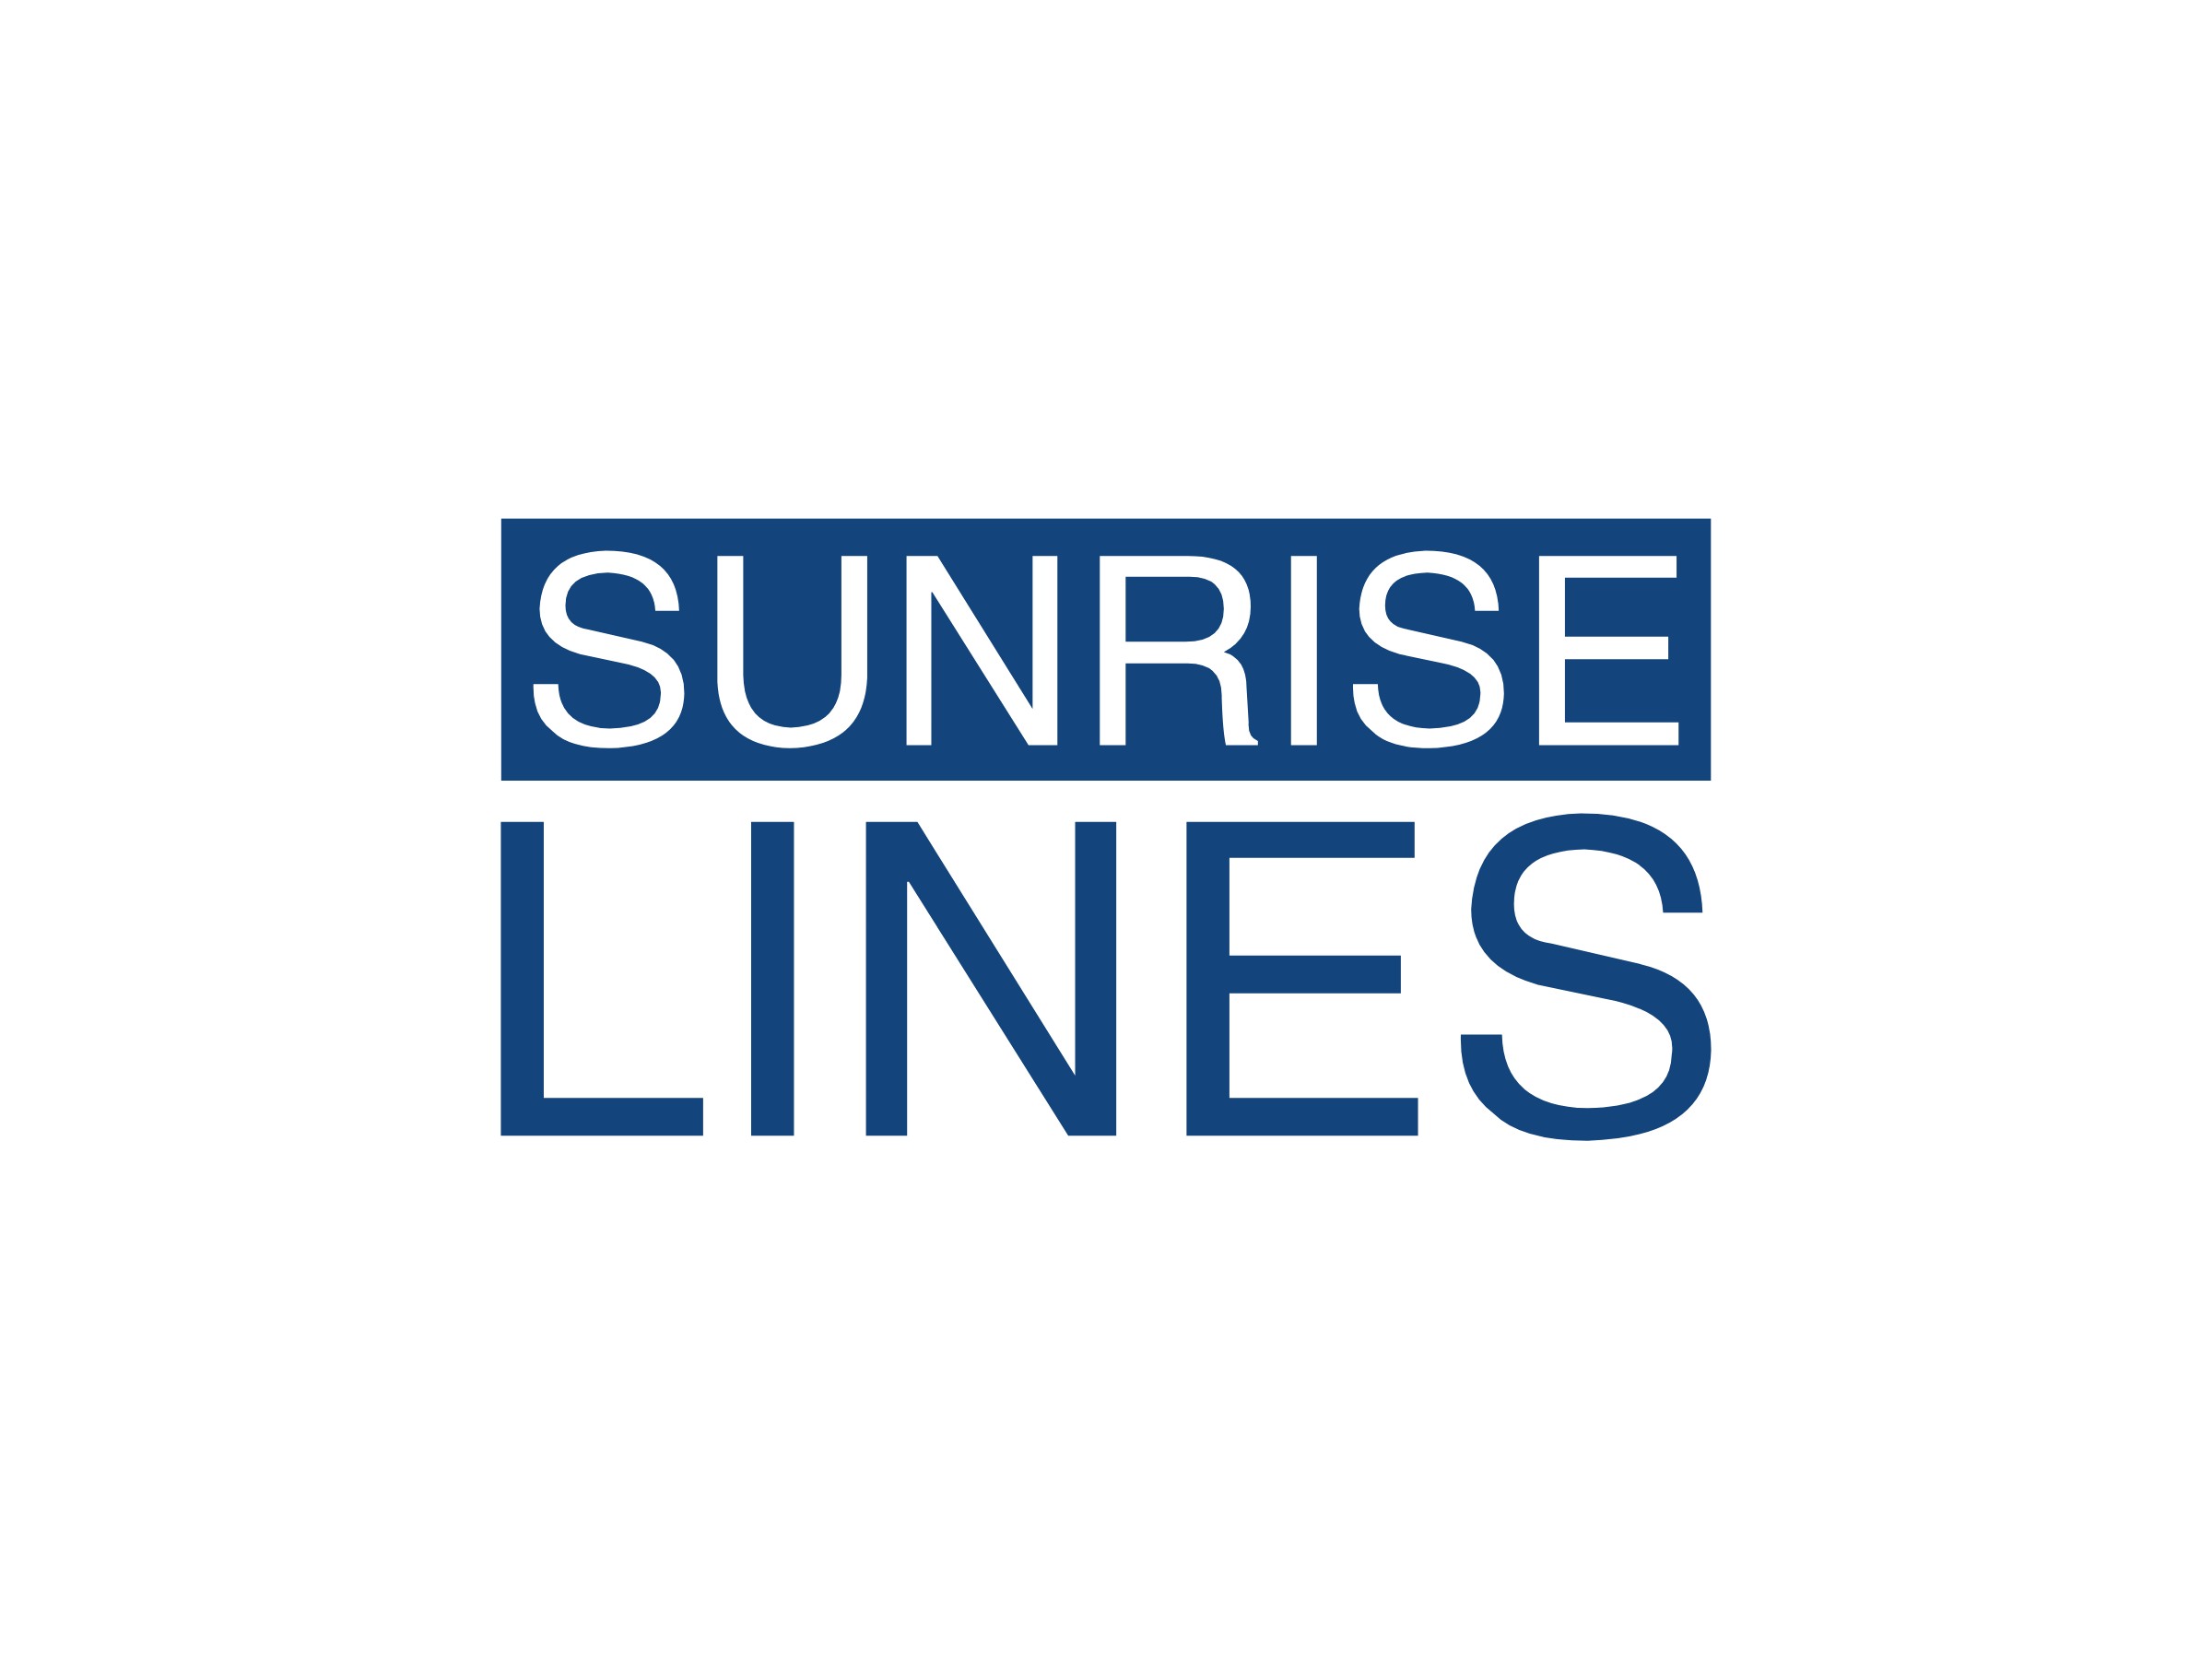 Sunrise lines - 